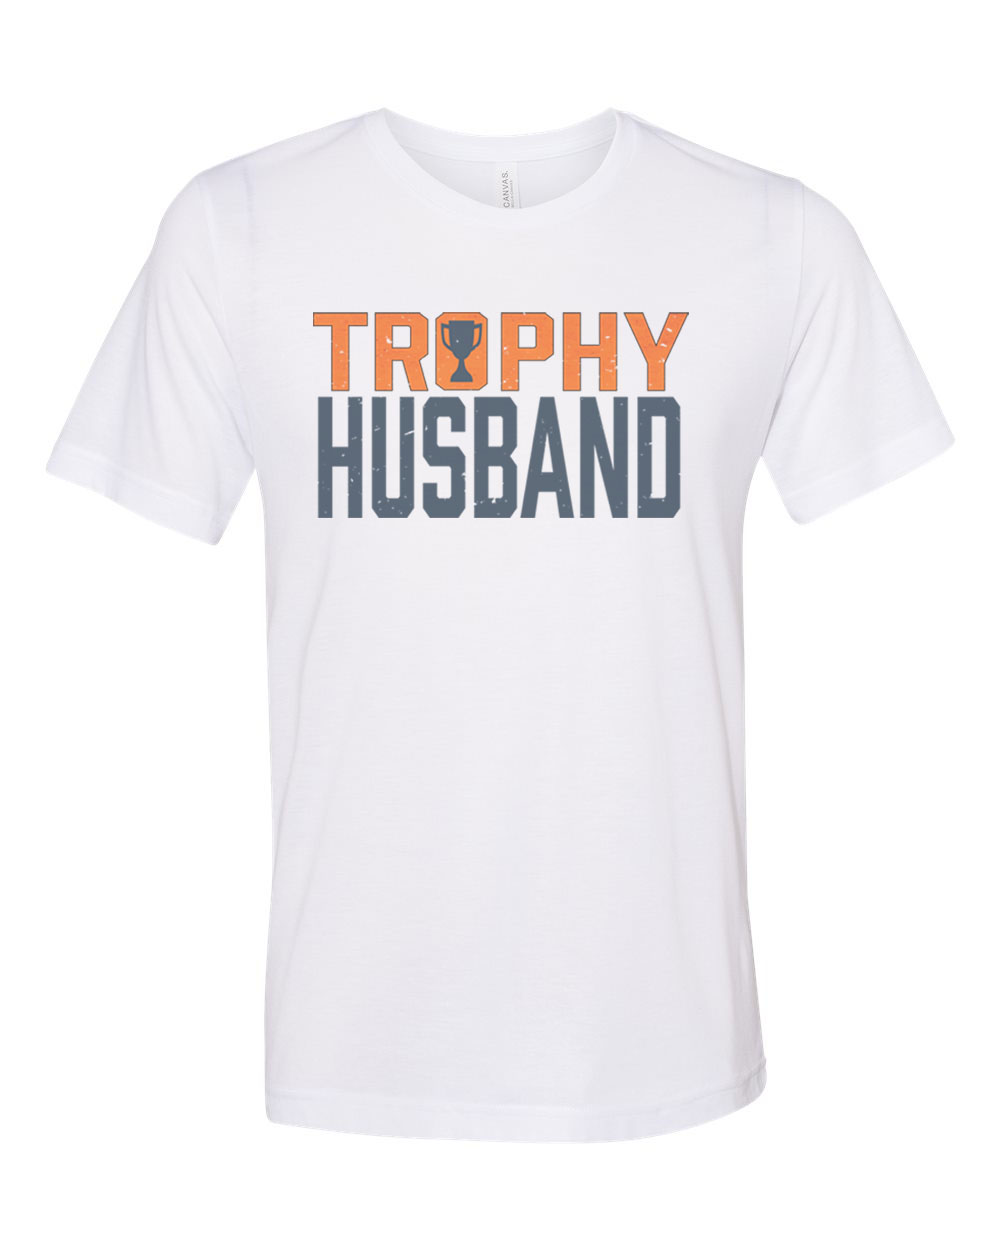 Trophy Husband Shirt, Gift For Him, Hubby Shirt, Trophy Husband, Father's Day Gift, Gift For Husband, Funny Husband Shirt, Husband Gift, White, SMALL - image 1 of 1